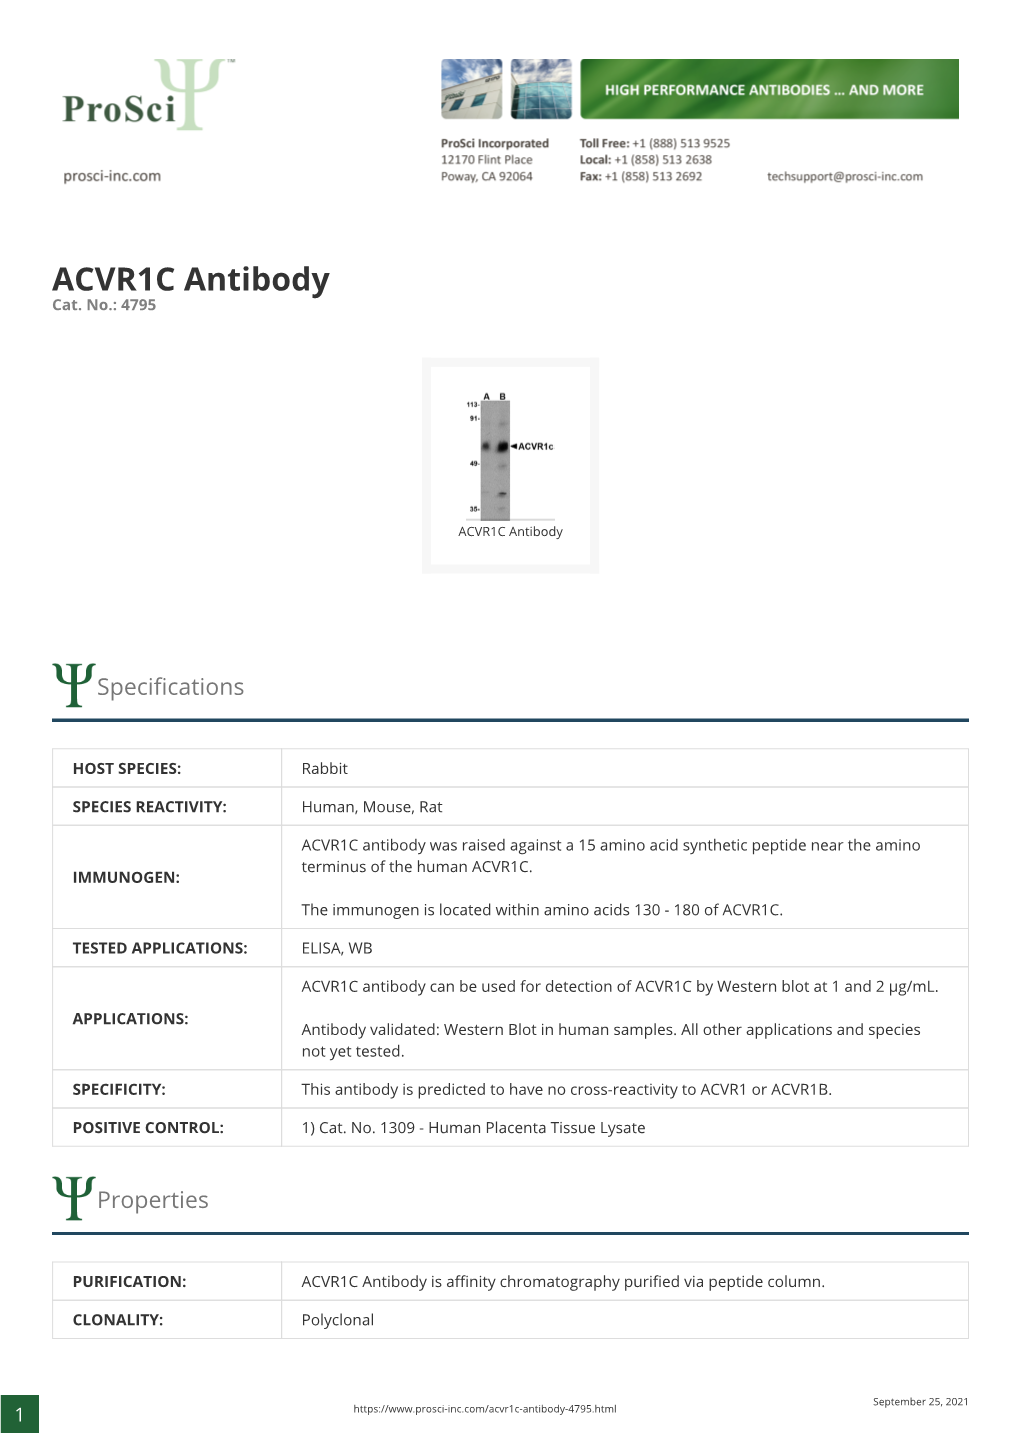 ACVR1C Antibody Cat